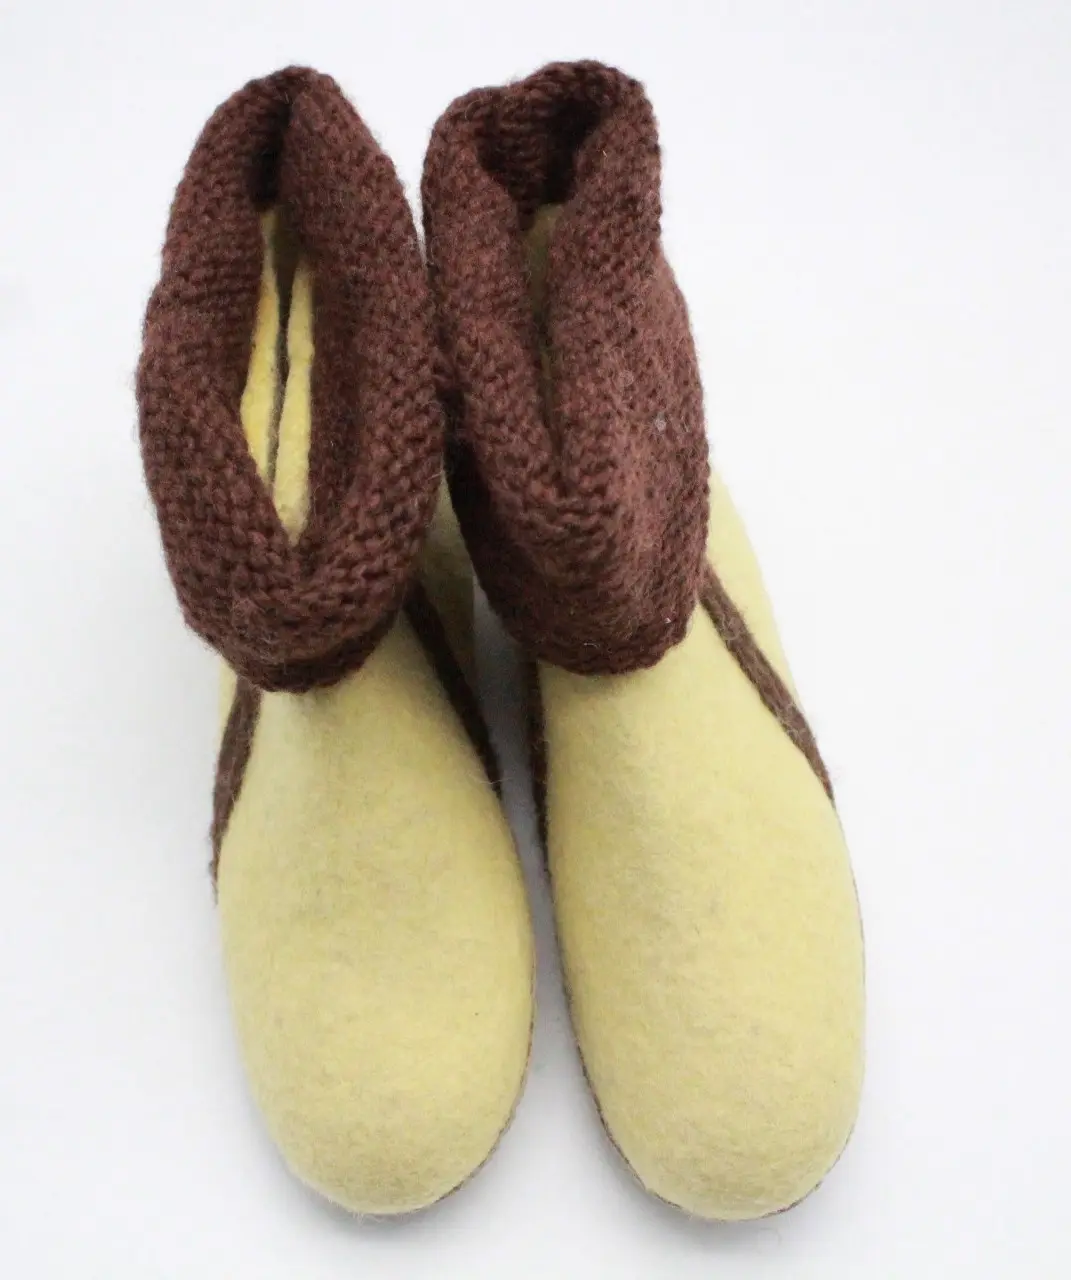 Yellow and brown mixed felt handmade boot - Attractive and Stylish sneaker - Eco-friendly handmade unisex felt indoor feet wear